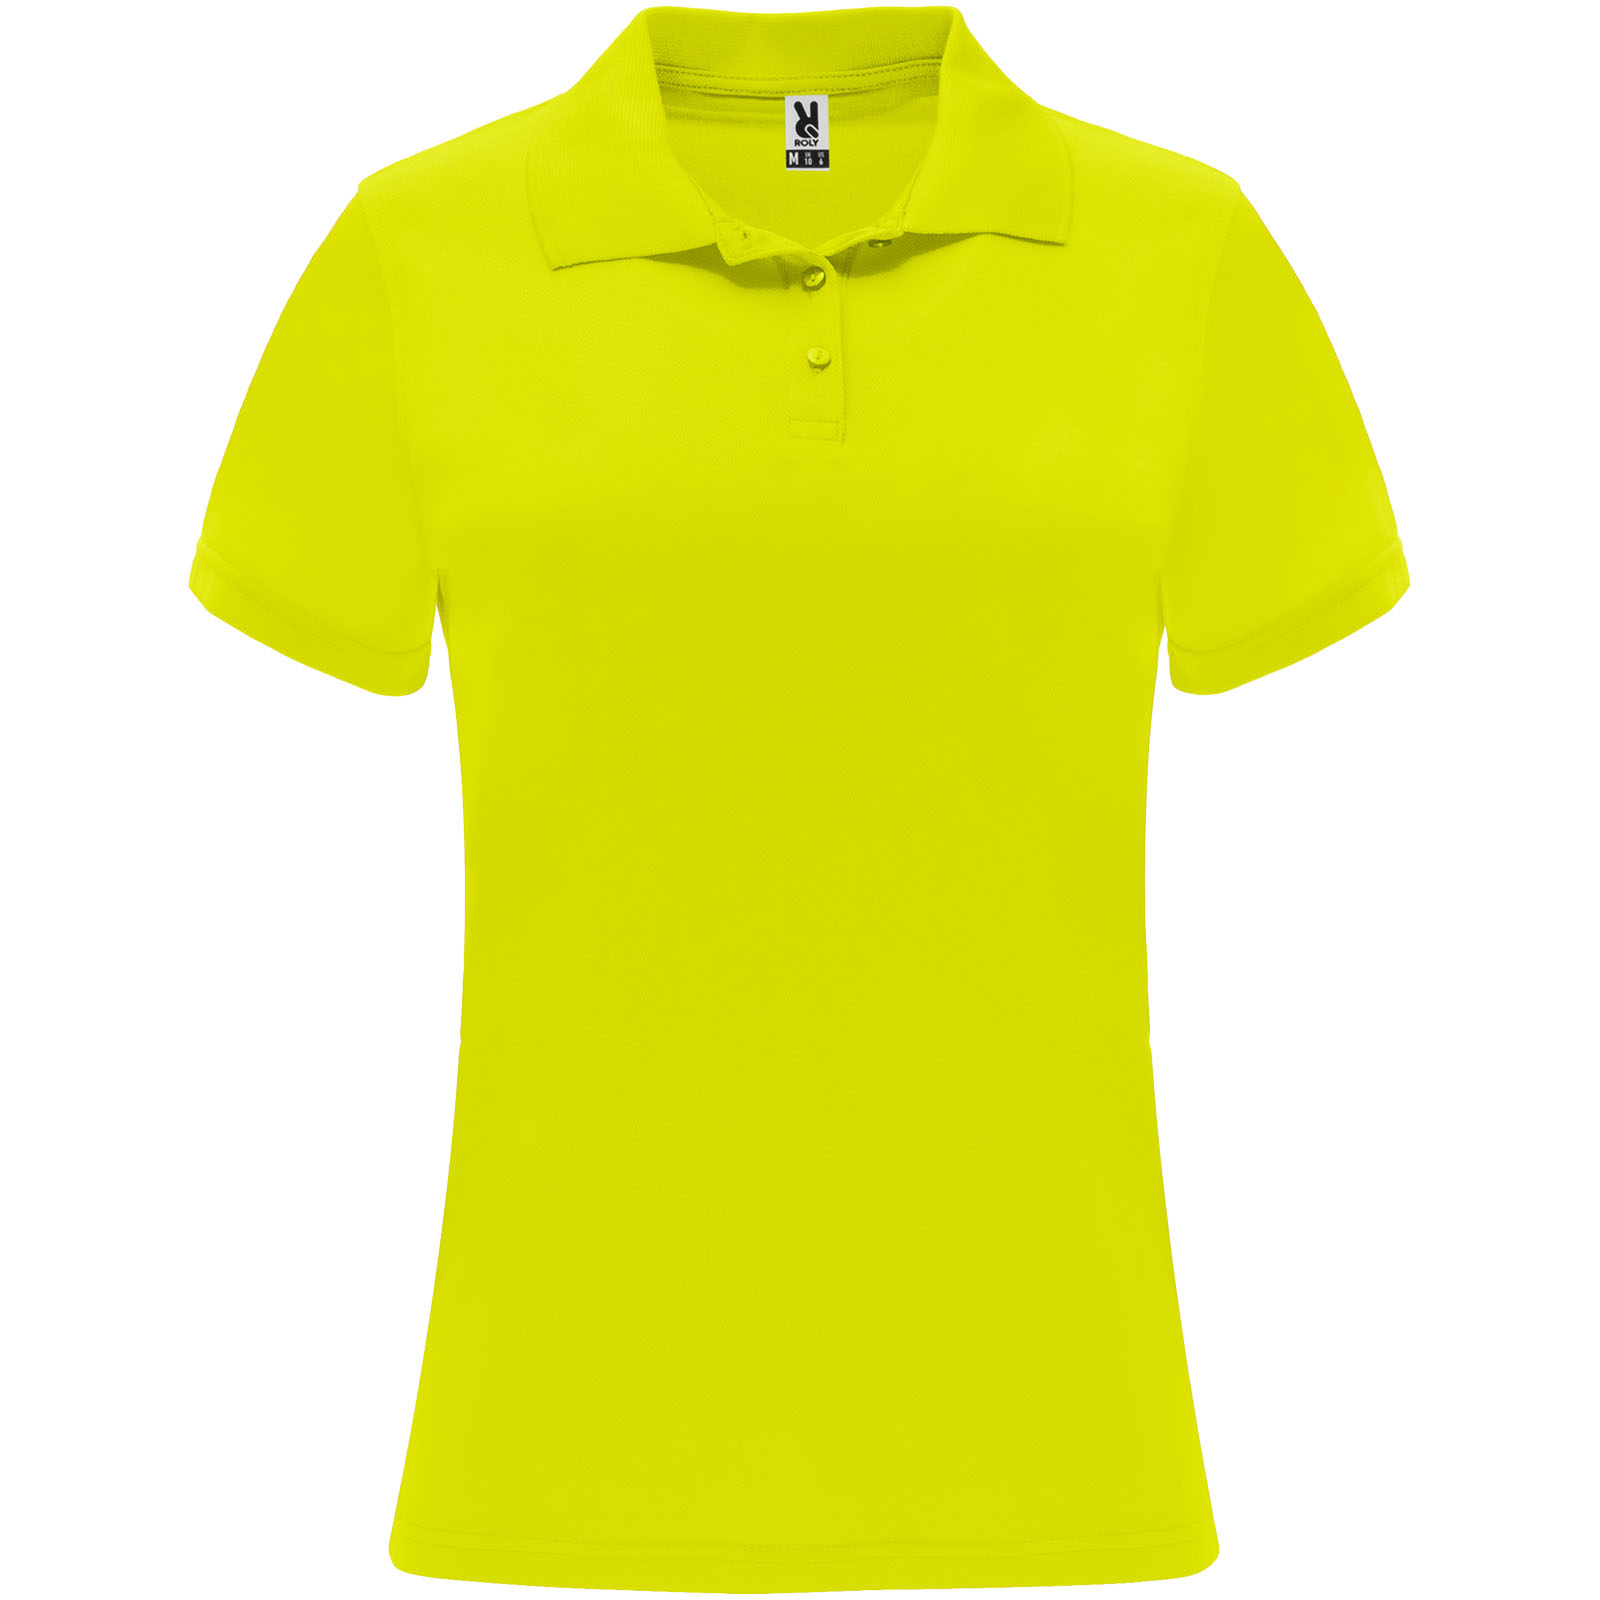 Clothing - Monzha short sleeve women's sports polo